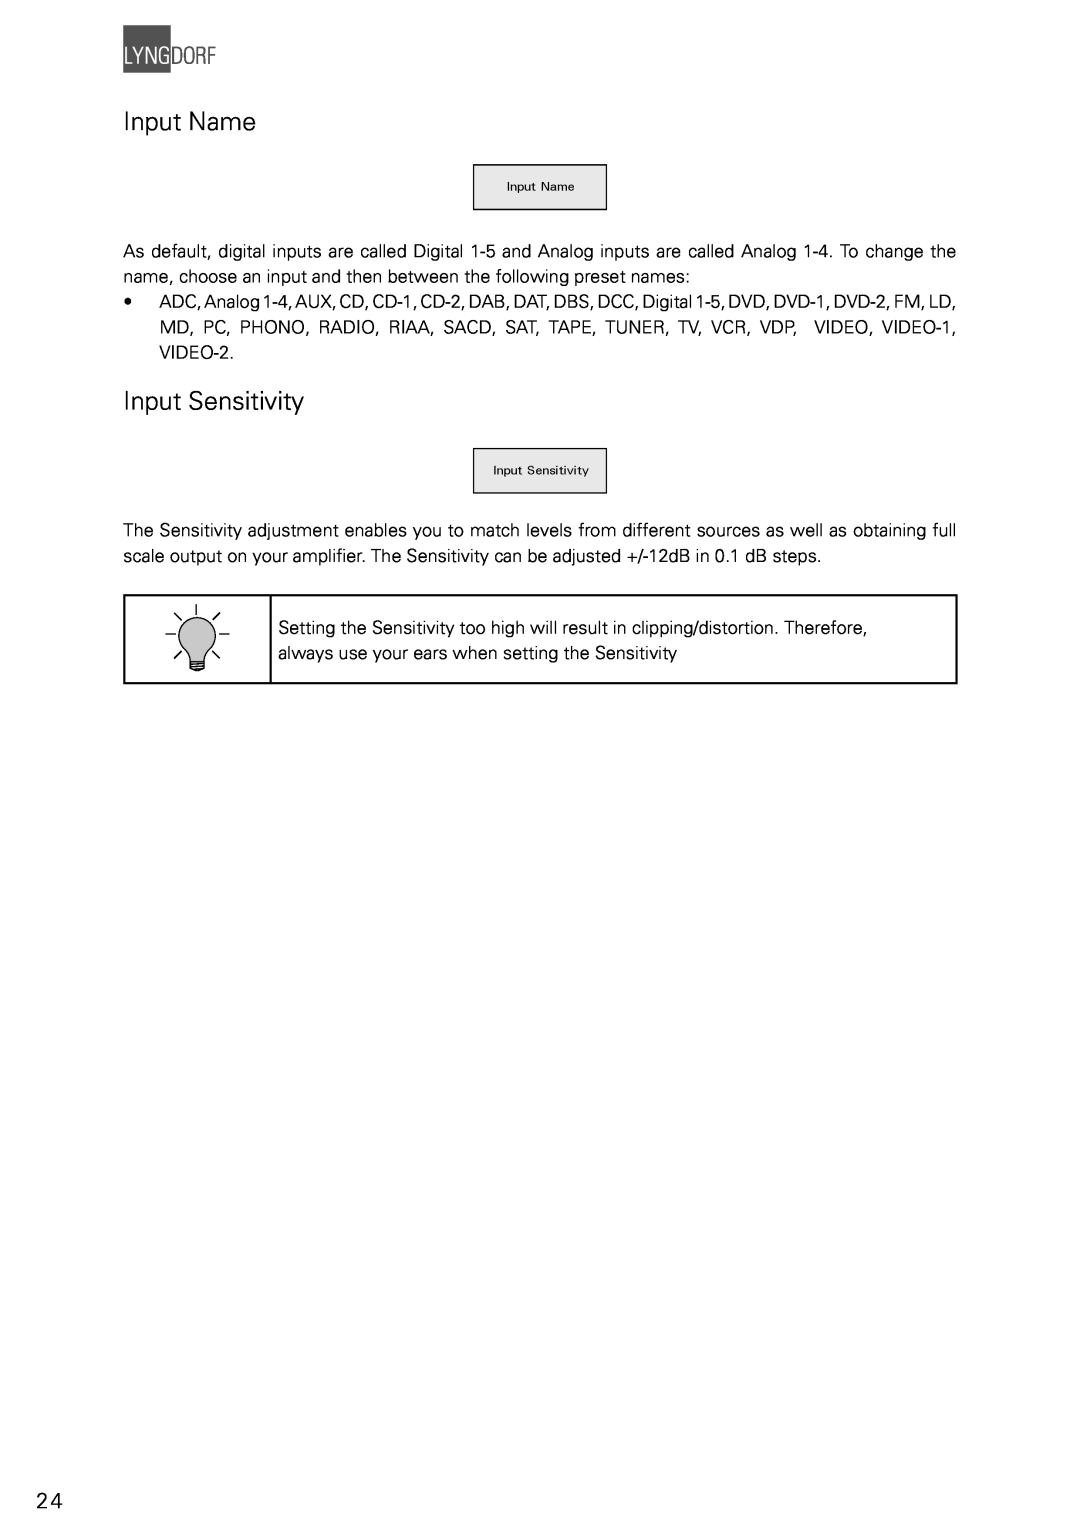 Lyngdorf Audio TDAI 2200 owner manual Input Name, Input Sensitivity 